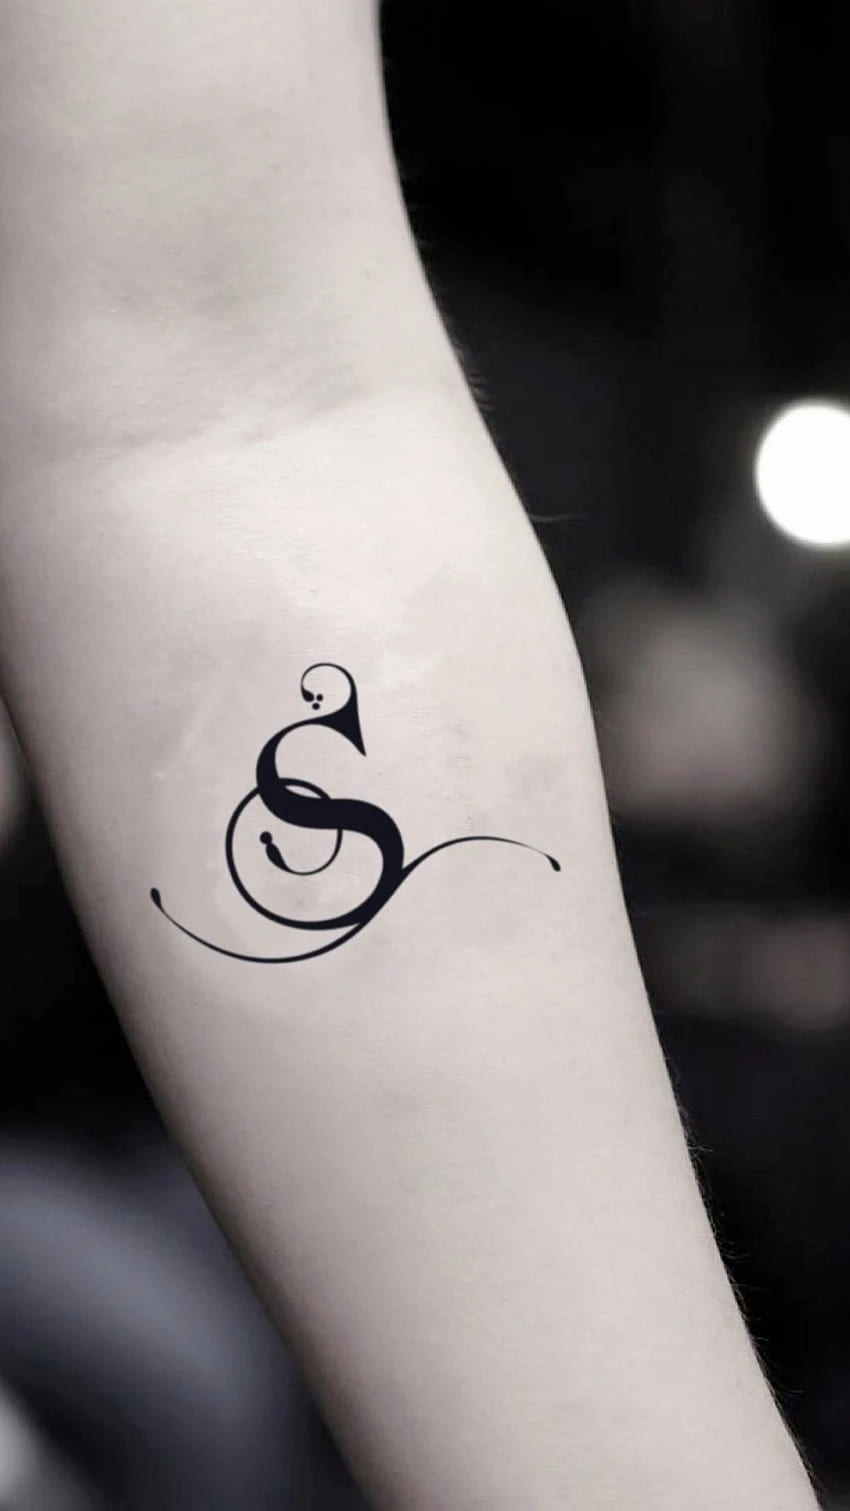 Tattoo Information Point: Alphabet 'S' tattoo